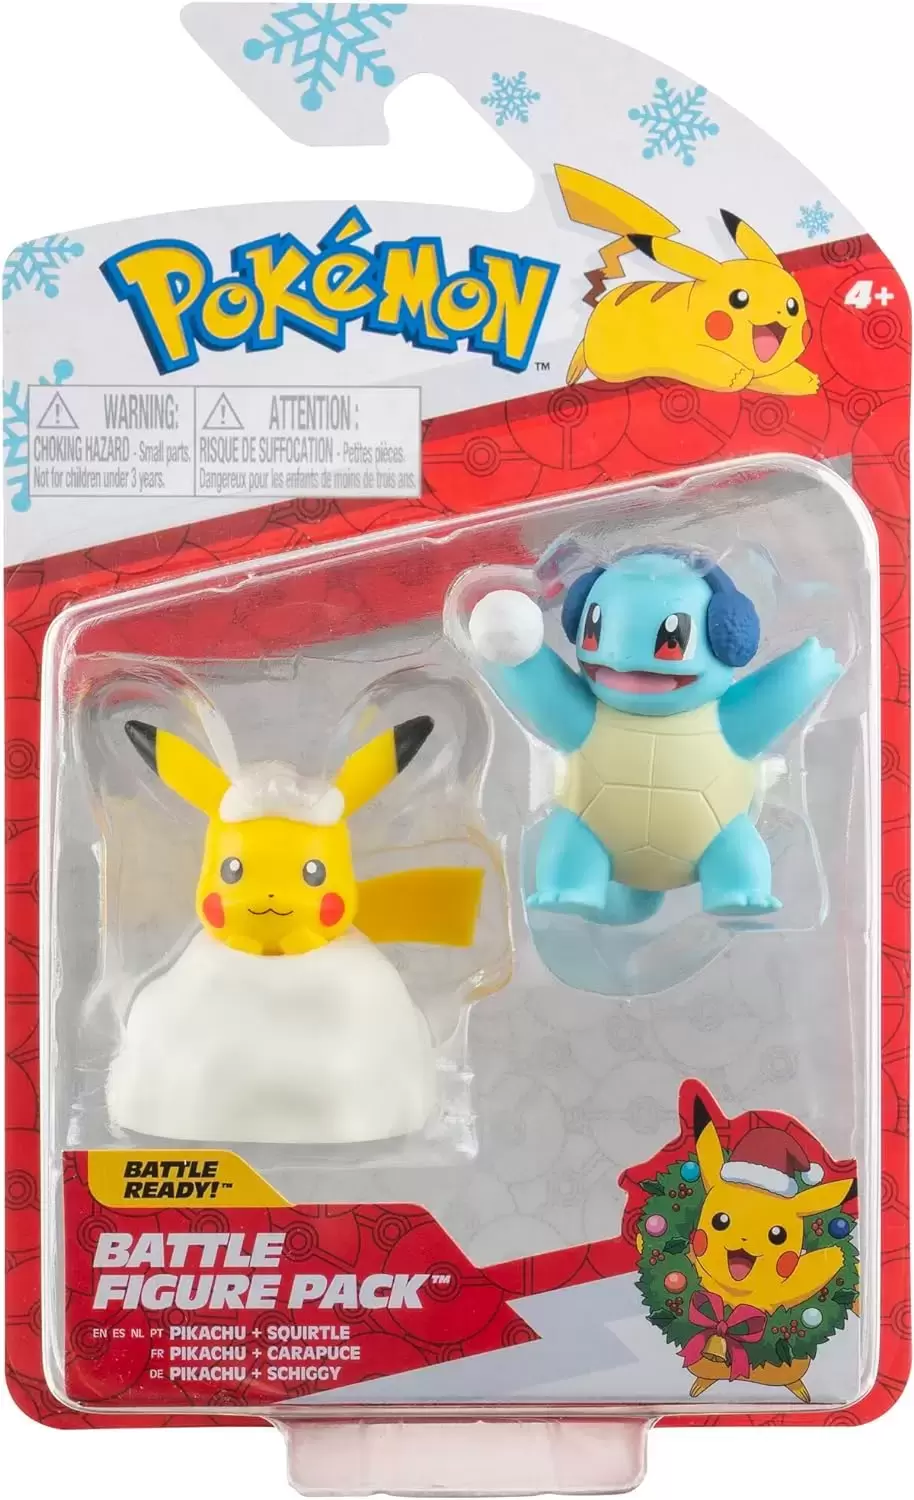 Pokémon Action Figures - Battle Figure Pack - Pikachu & Squirtle (Holiday)